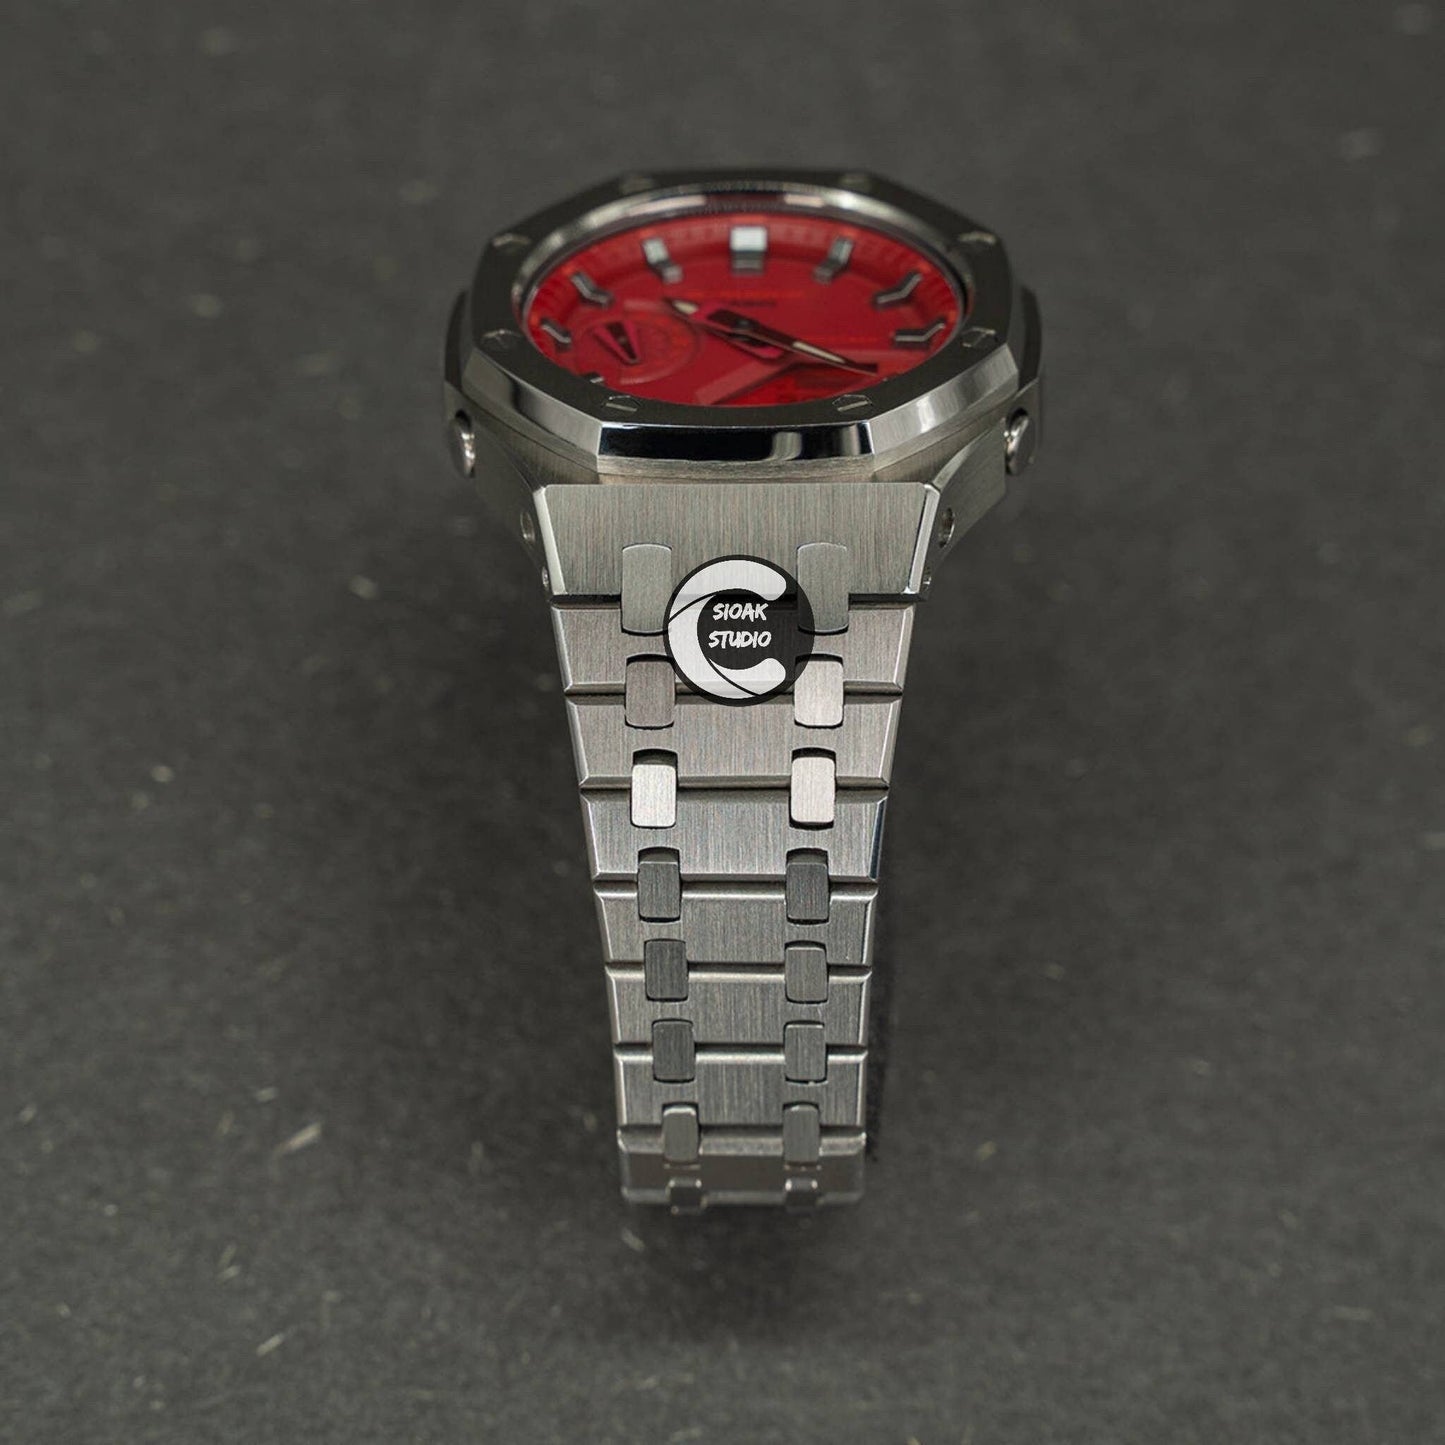 Casioak Mod Watch Silver Case Metal Strap Red Silver Time Mark Red Dial 44mm - Casioak Studio